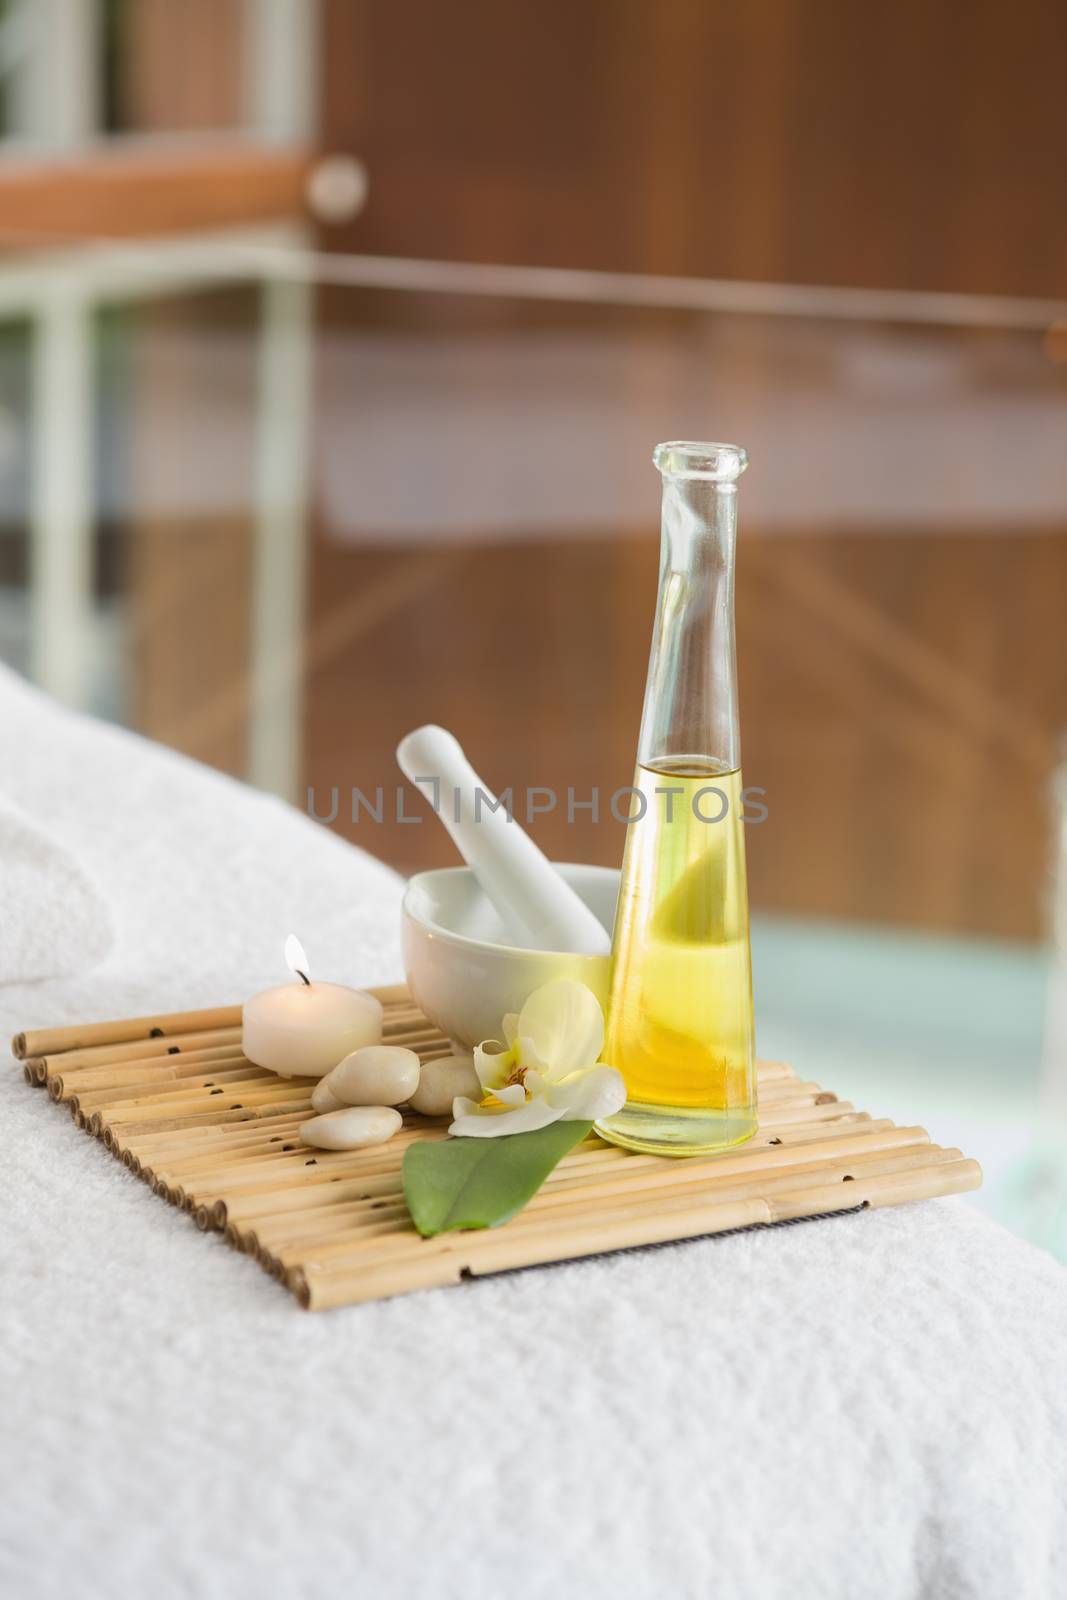 Beauty treatments on massage table by Wavebreakmedia